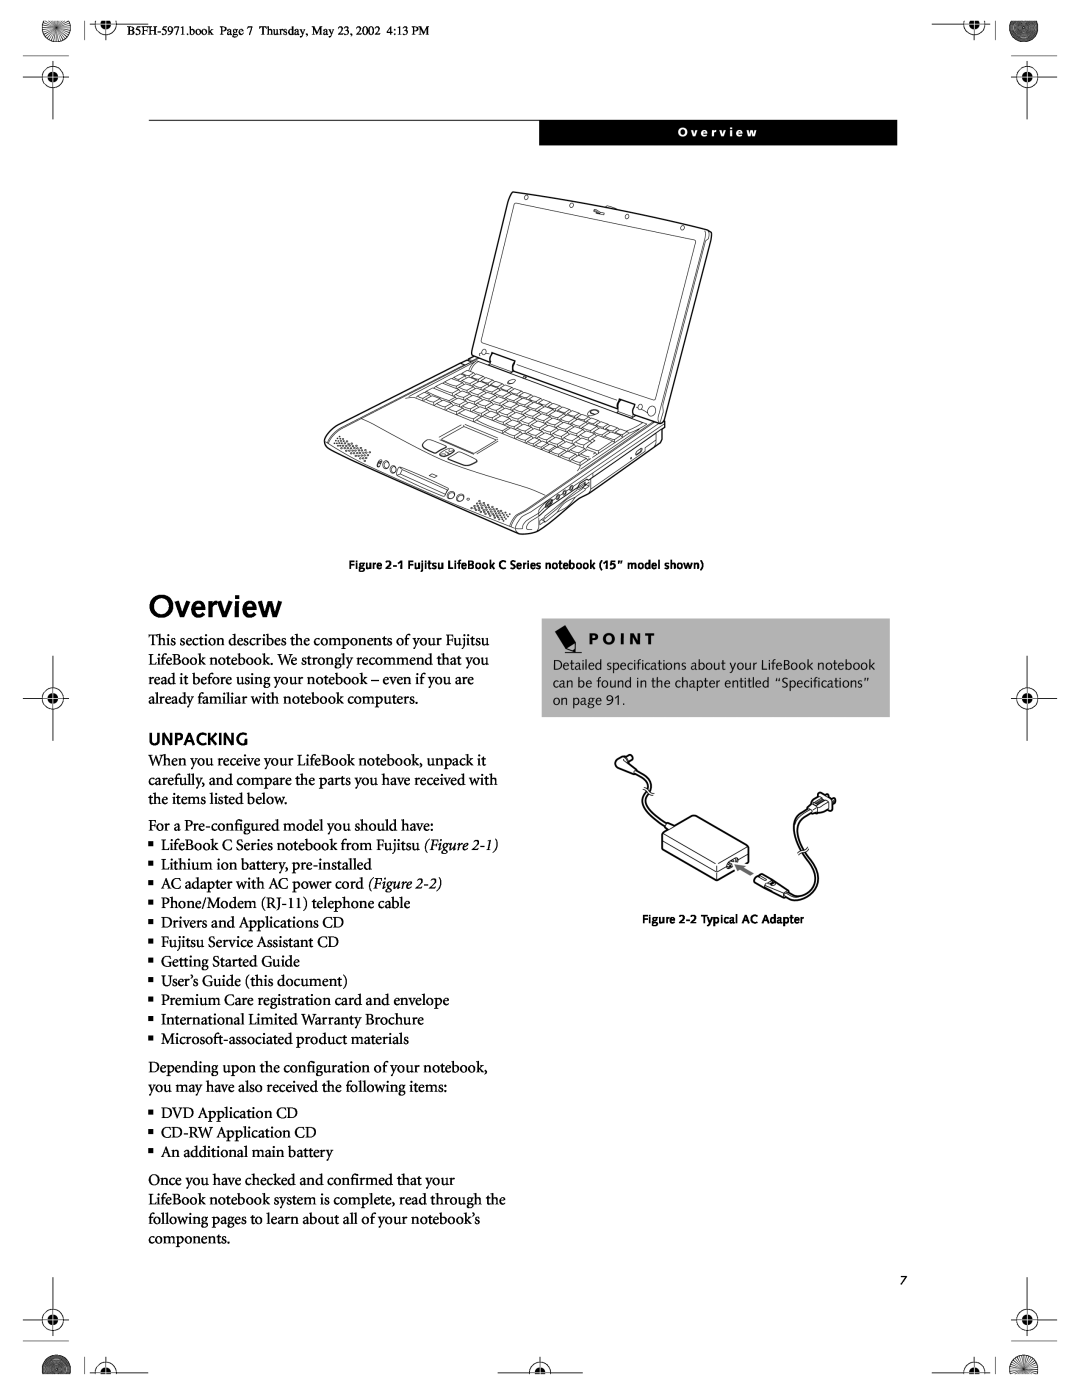 Fujitsu C2010, C2111 manual Overview, Unpacking, P O I N T, Drivers and Applications CD 